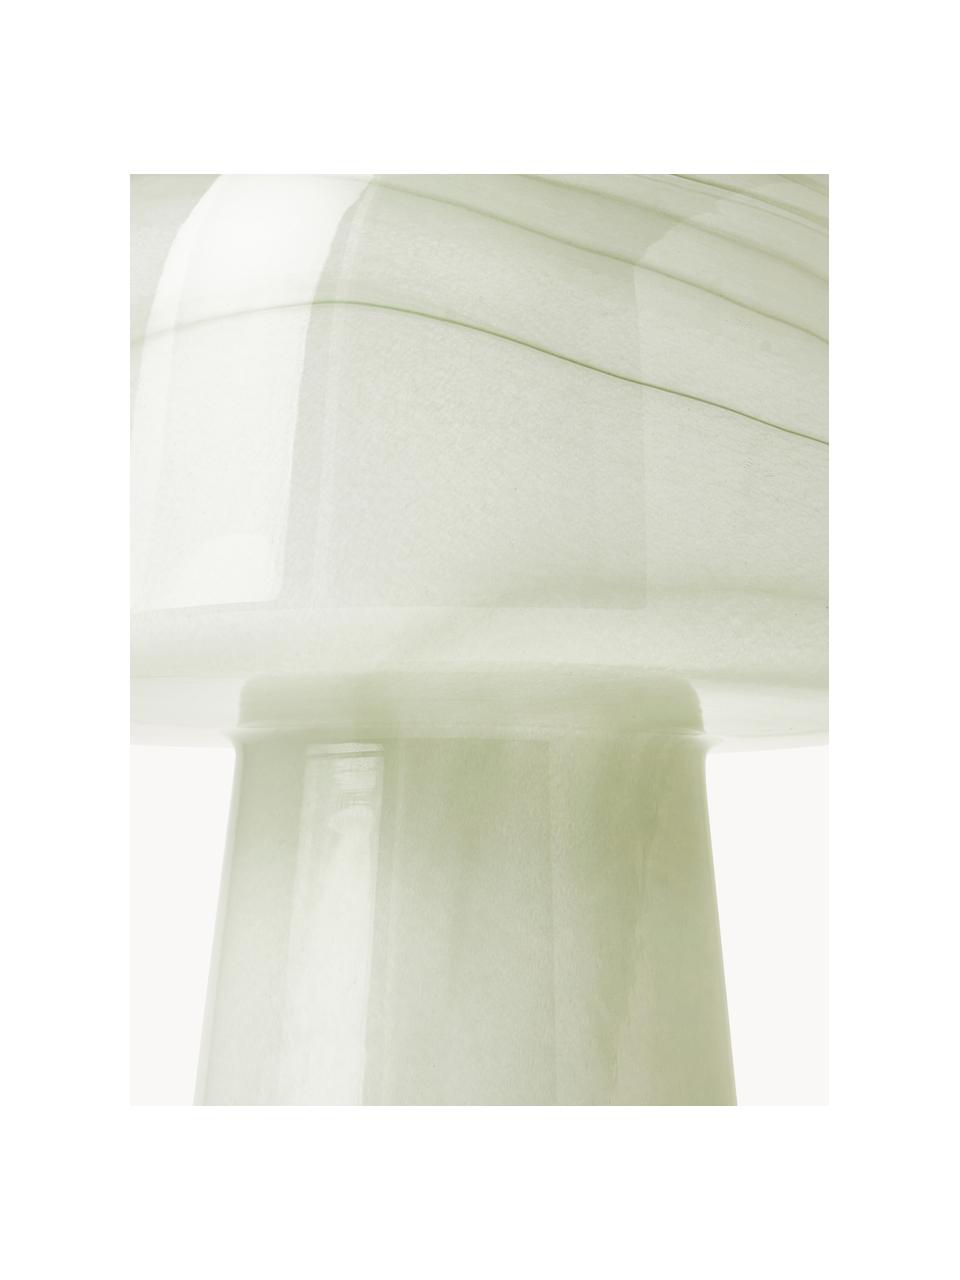 Petite lampe à poser aspect marbre Talia, Aspect marbre vert olive, Ø 20 x haut. 26 cm